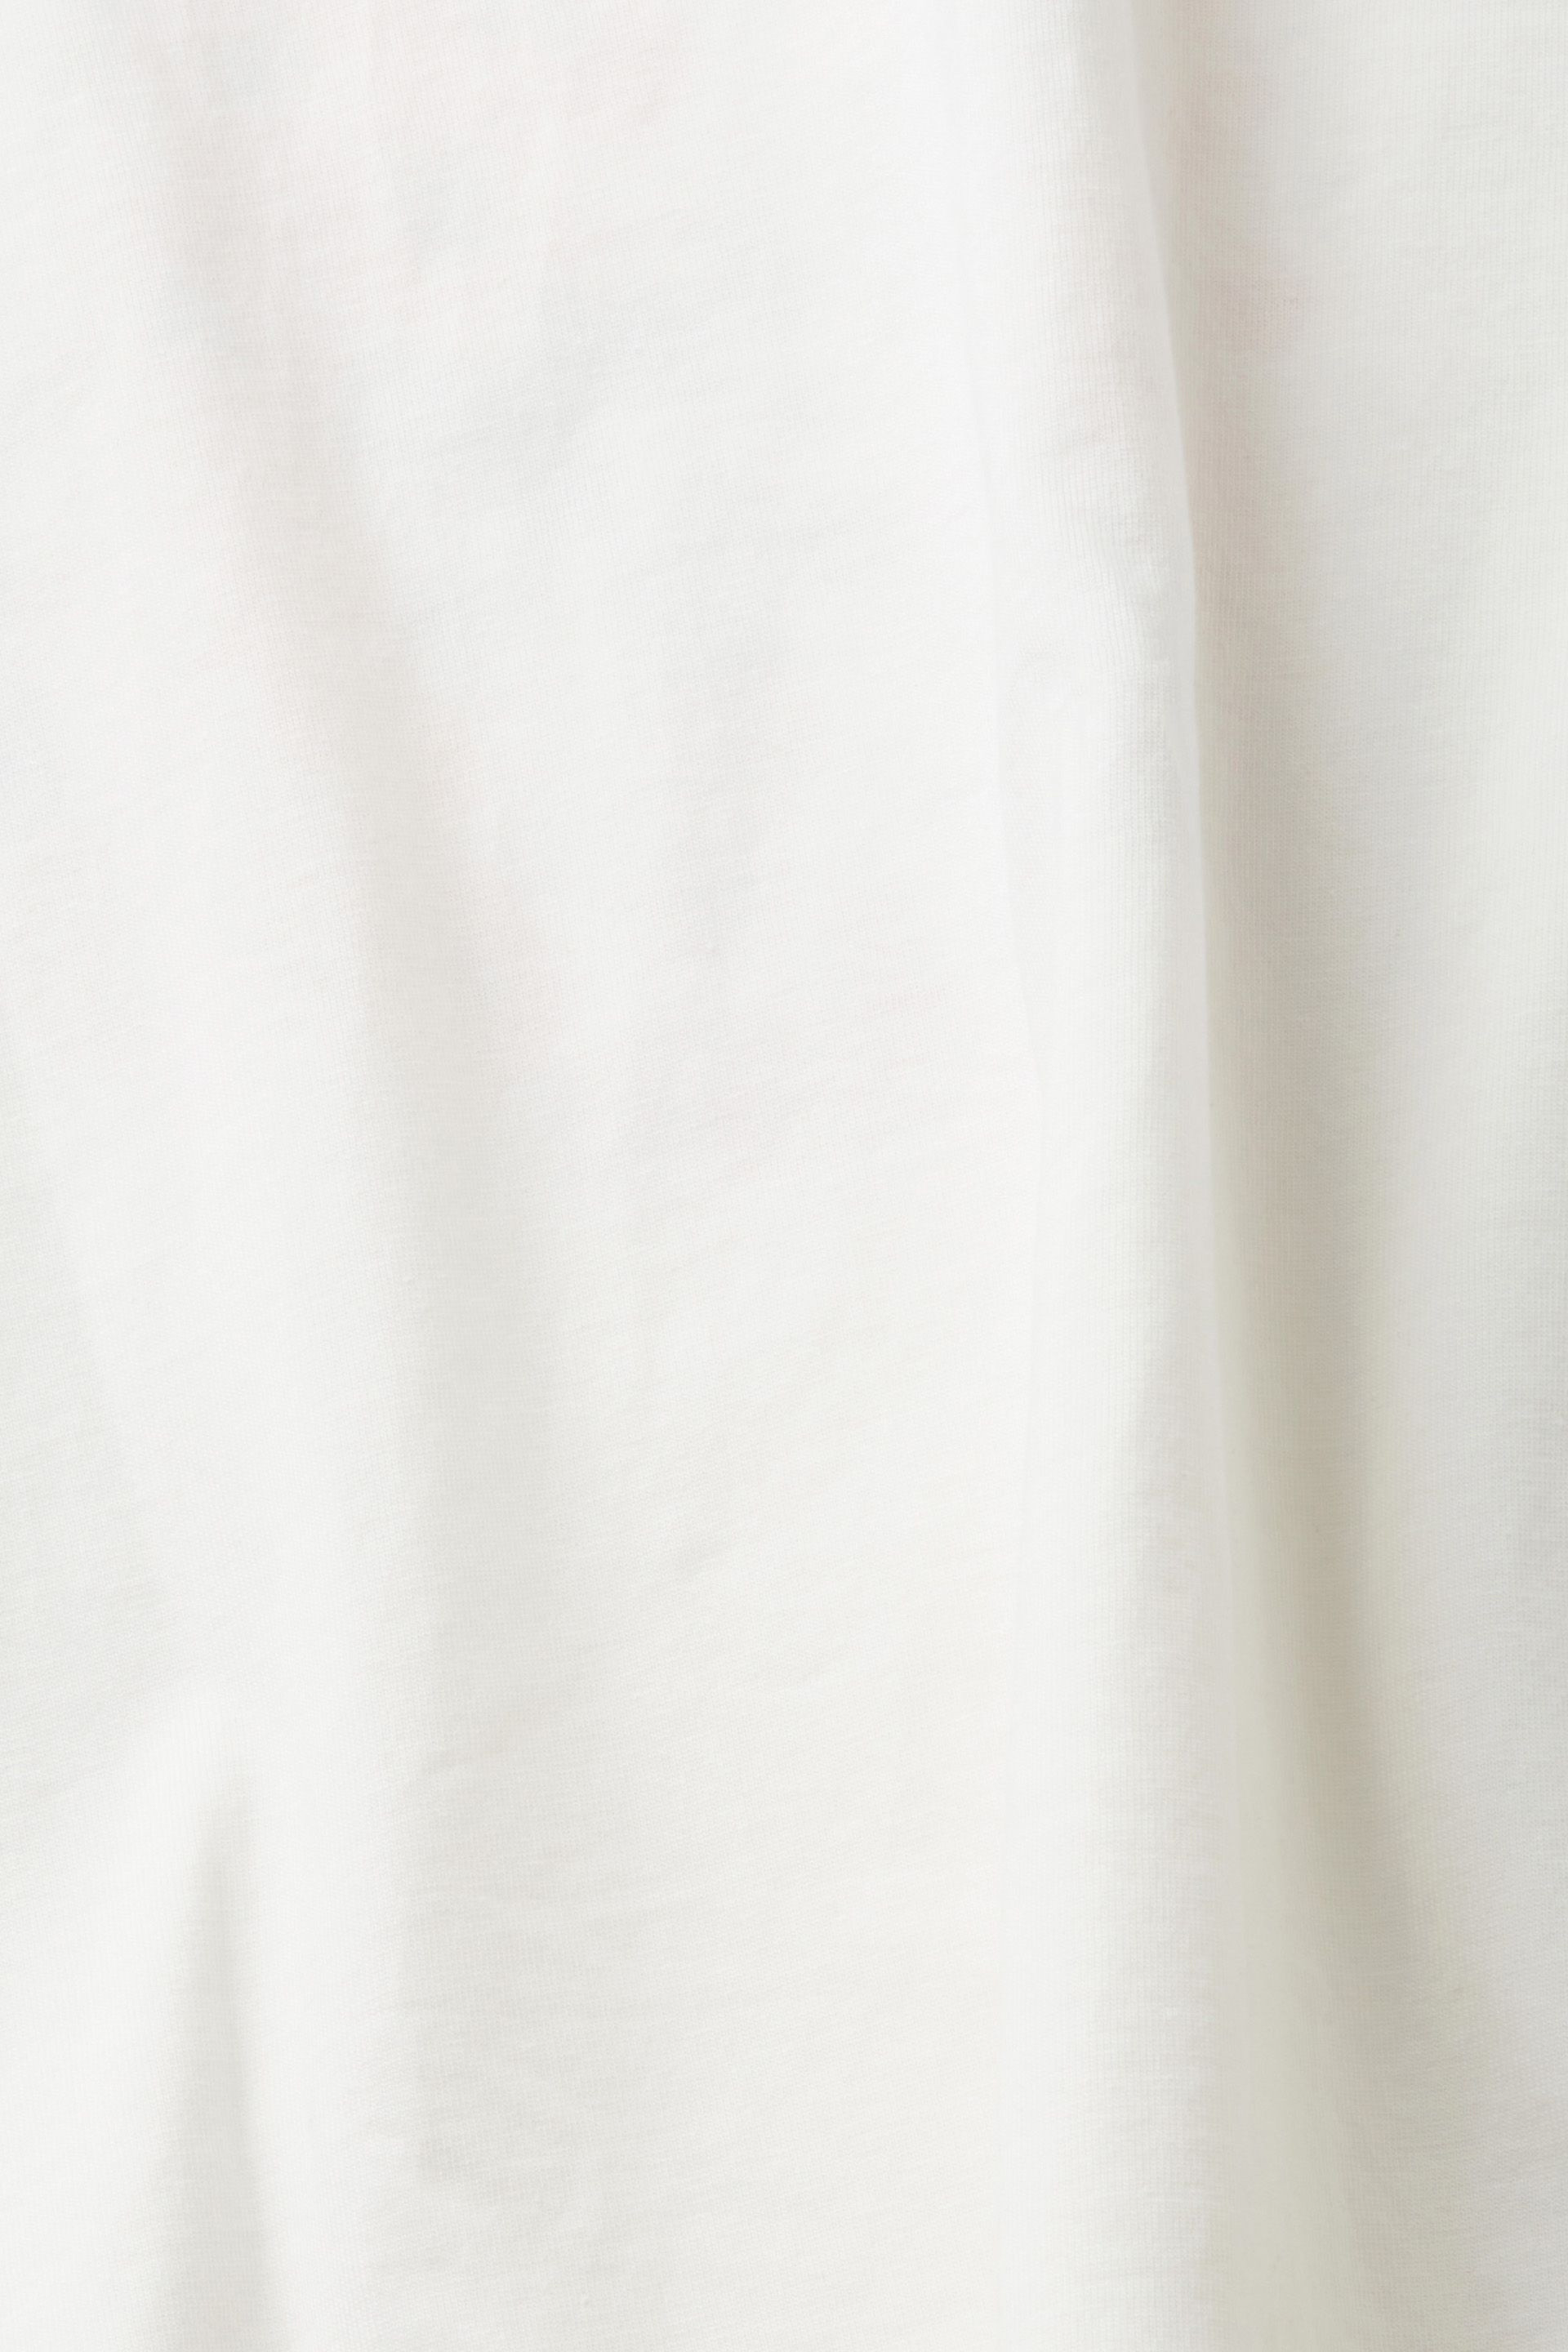 Esprit - T-shirt con stampa floreale, Bianco, large image number 1